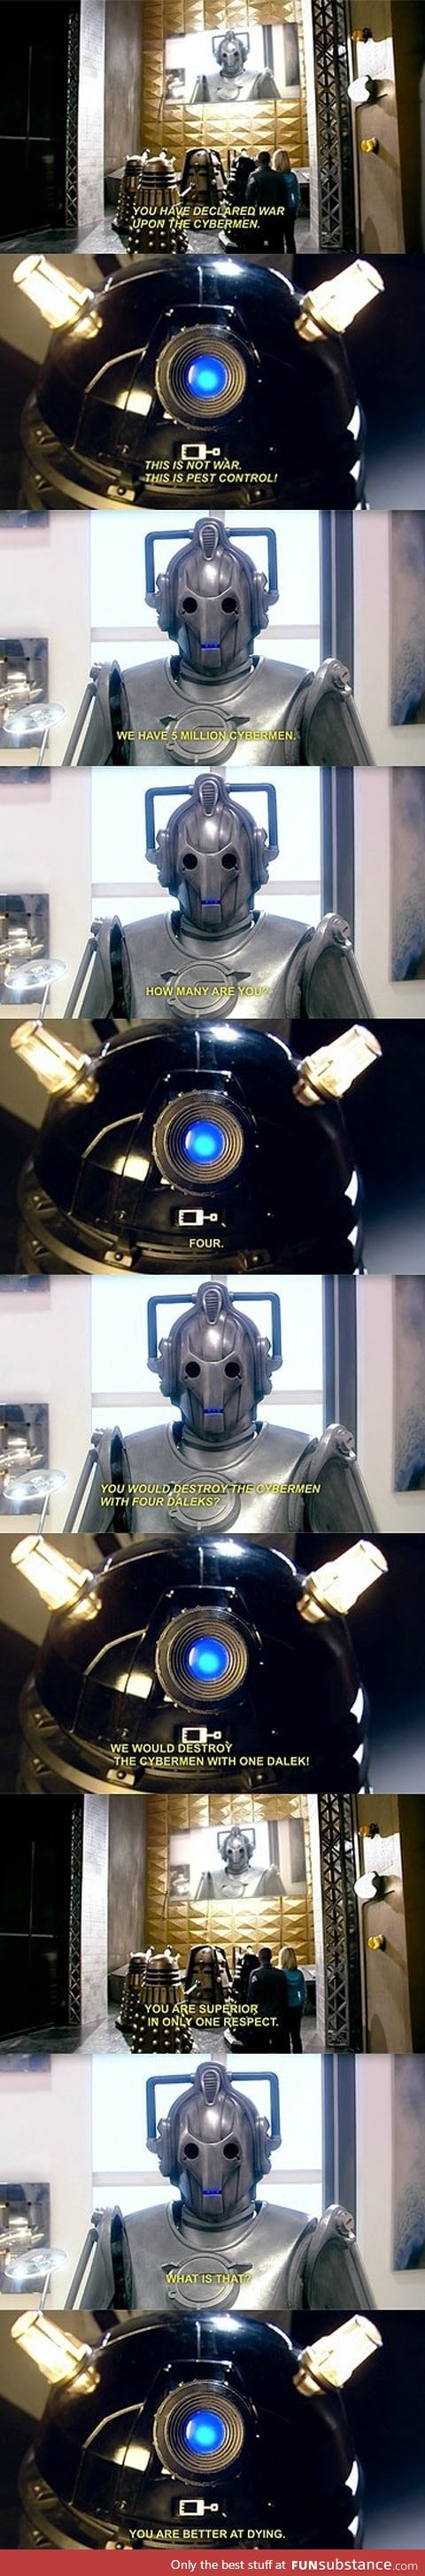 Cyberman v Dalek